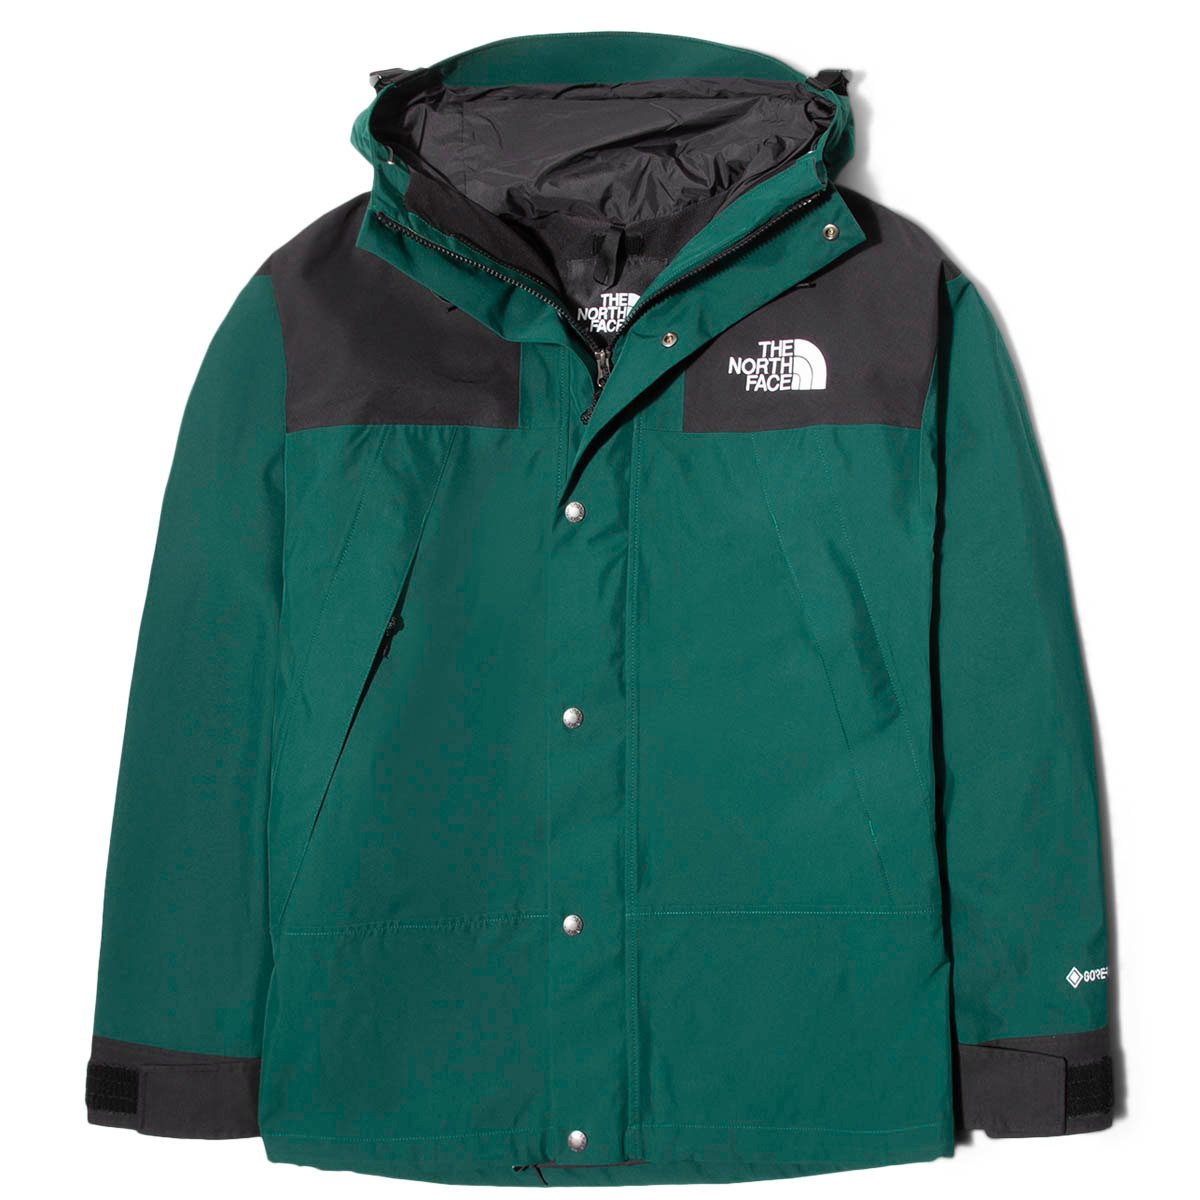 1990 mountain jacket